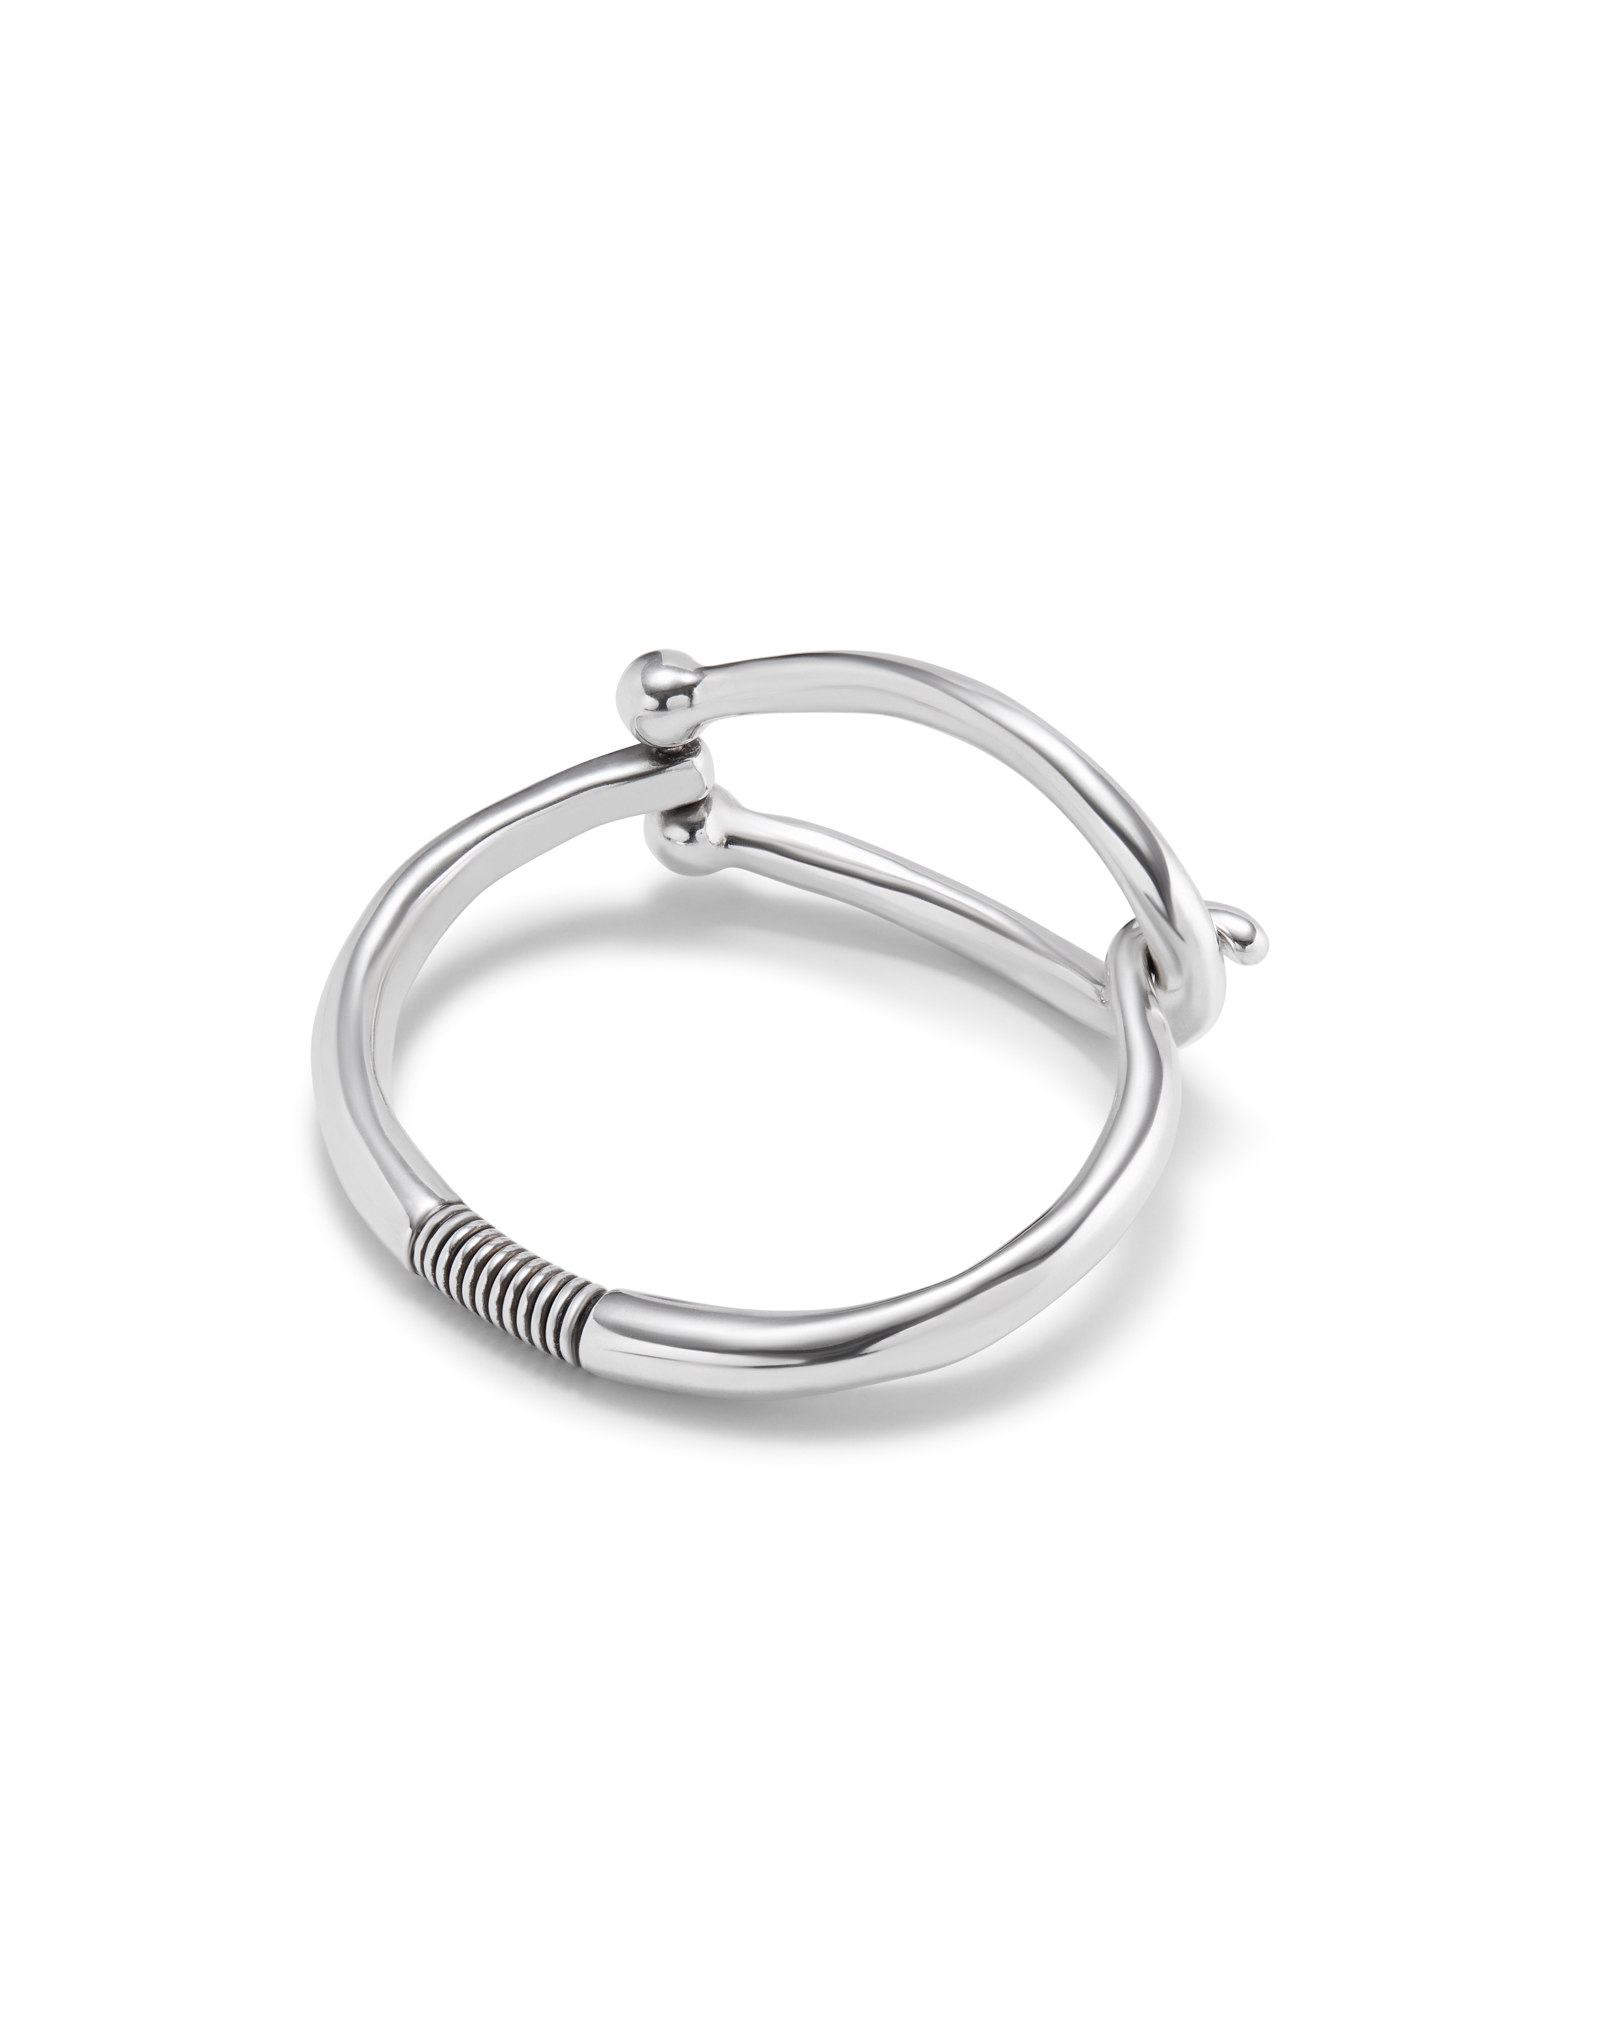 Sterling Silver Plain Band Bangle Bracelet, Silver Bangle, Silver Bracelets  | eBay